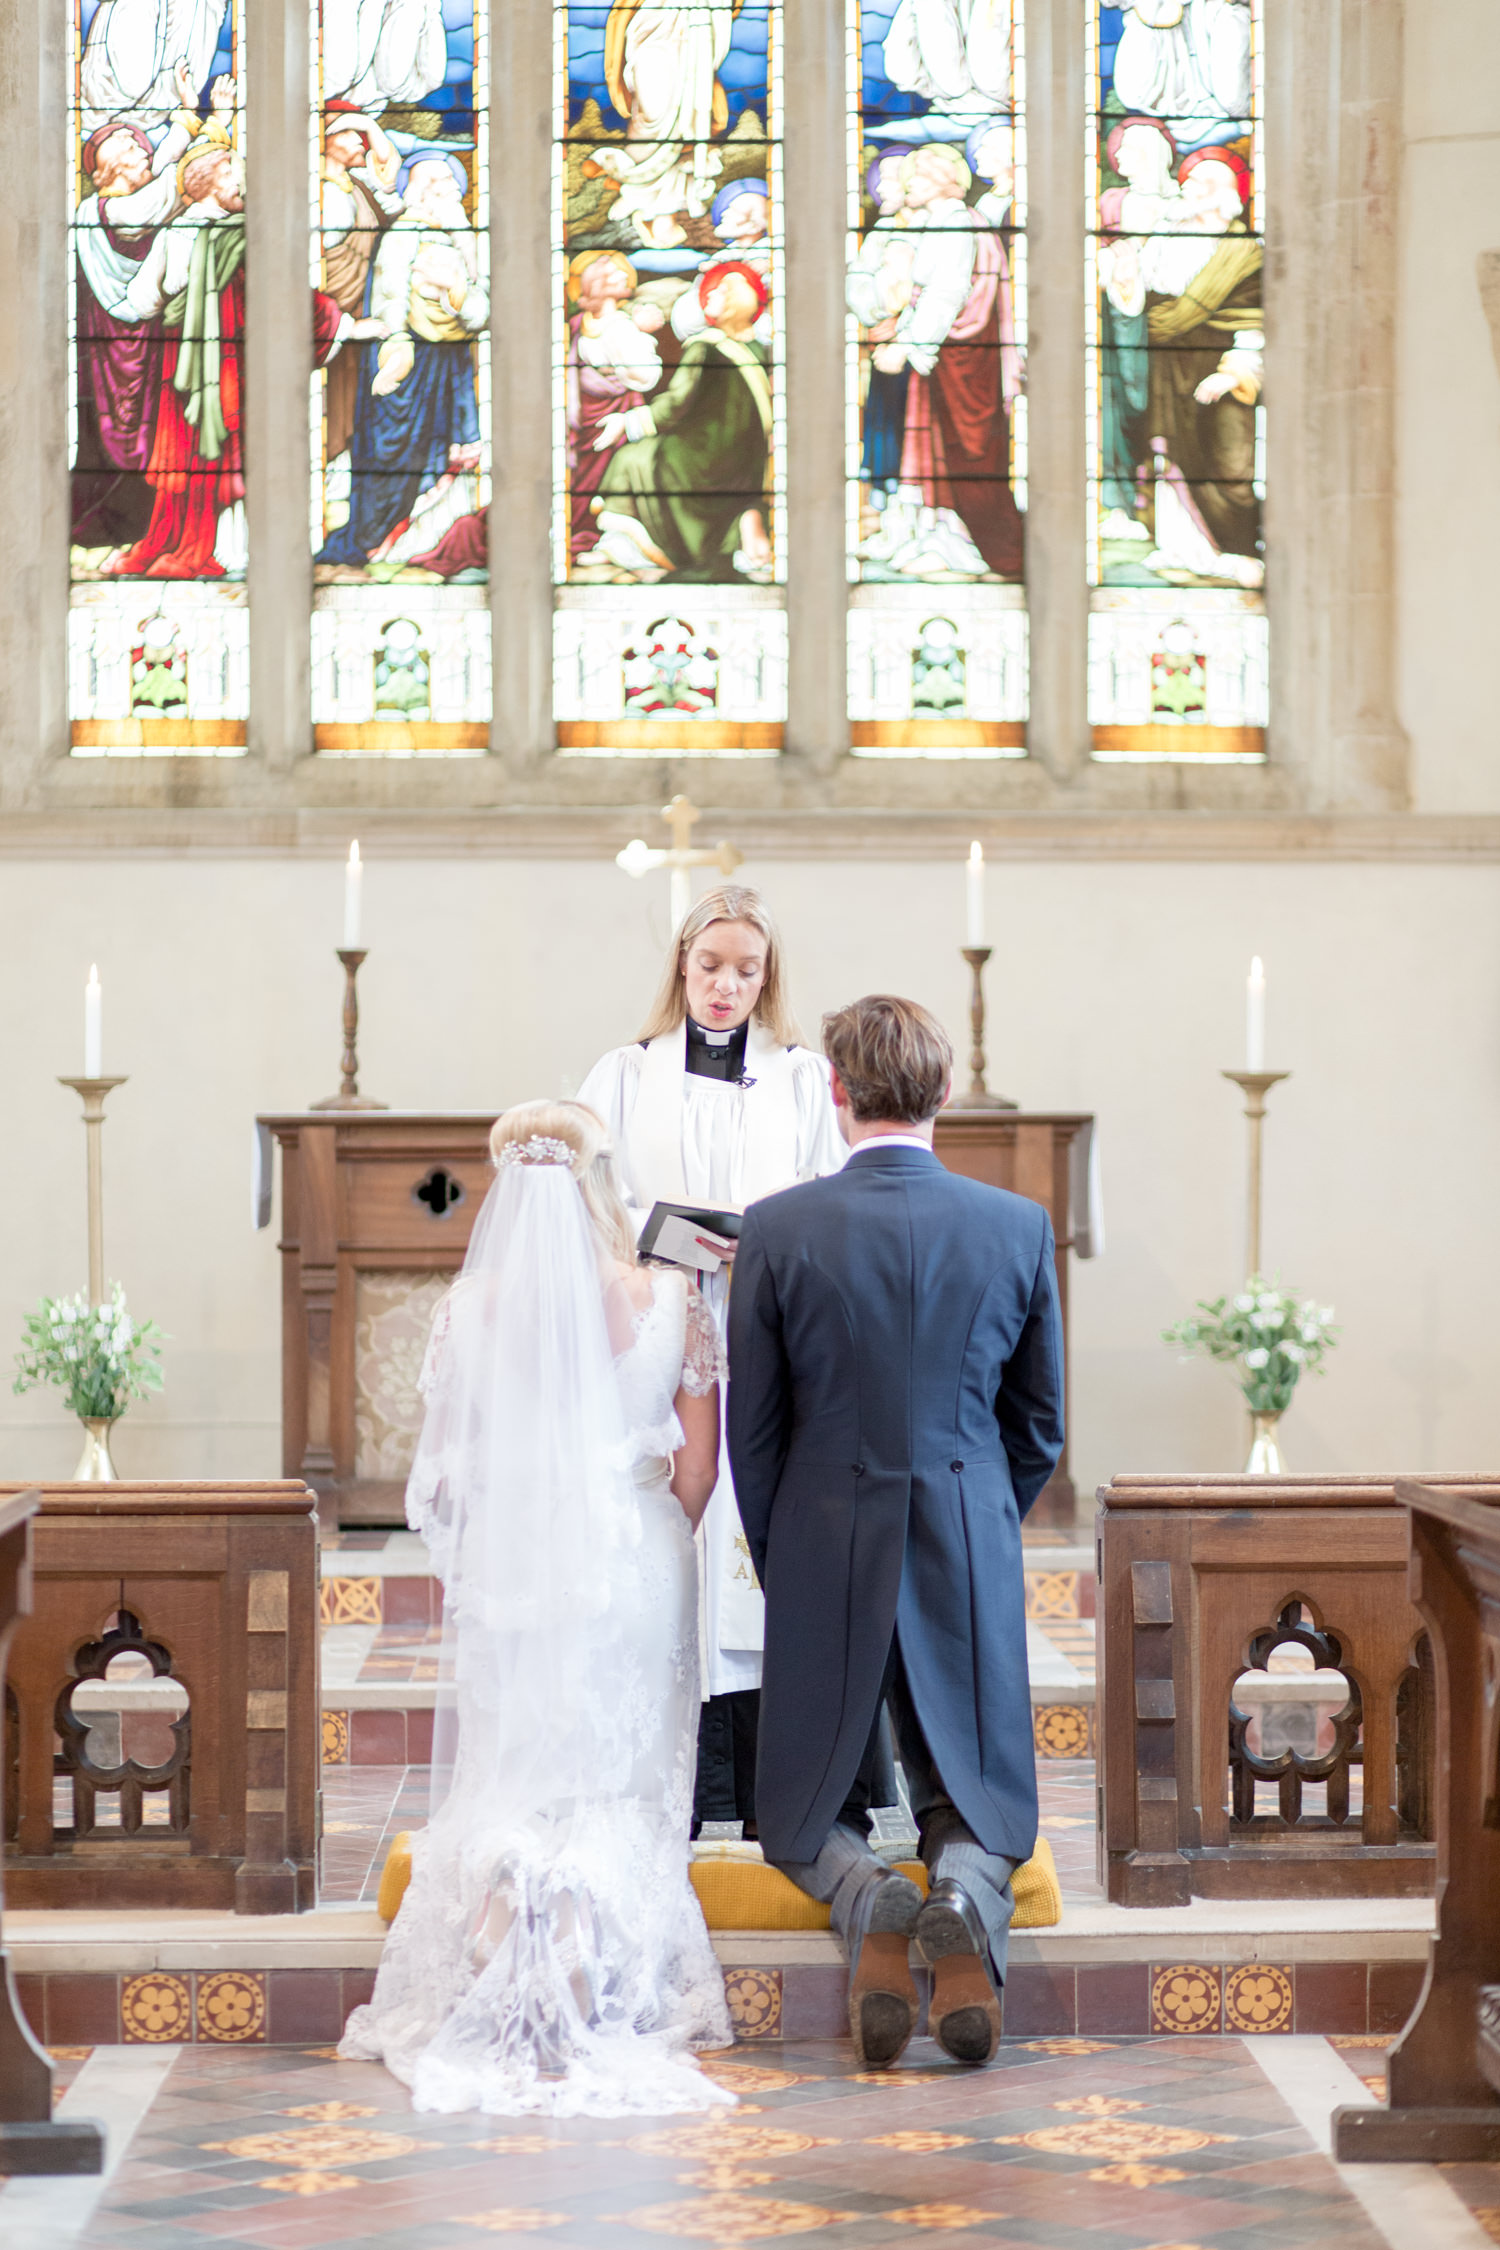 An Enchanting and Romantic Newton Hall Wedding with an Art Deco Temperley Dress